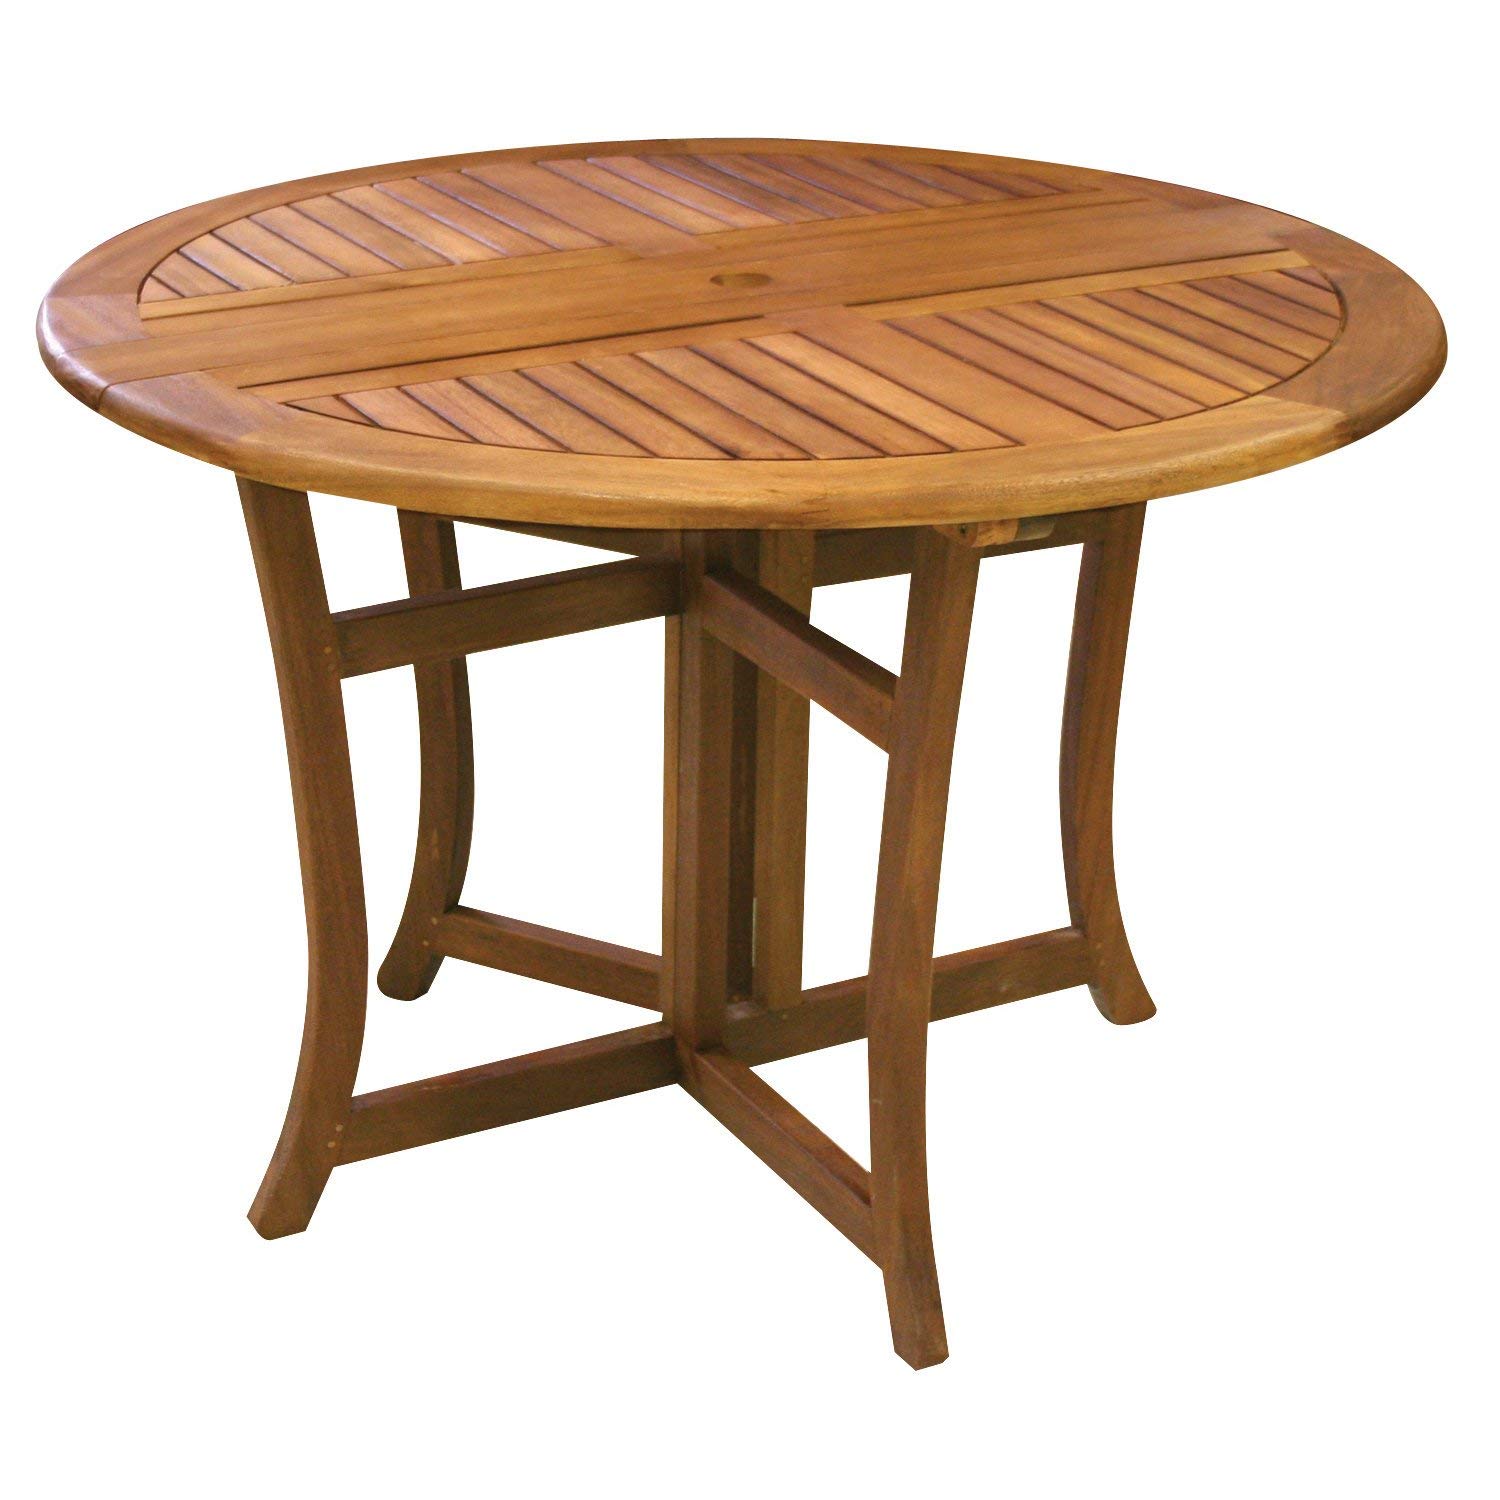 folding patio table amazon.com : eucalyptus 43 inch round folding deck table : patio dining UDOVNQK